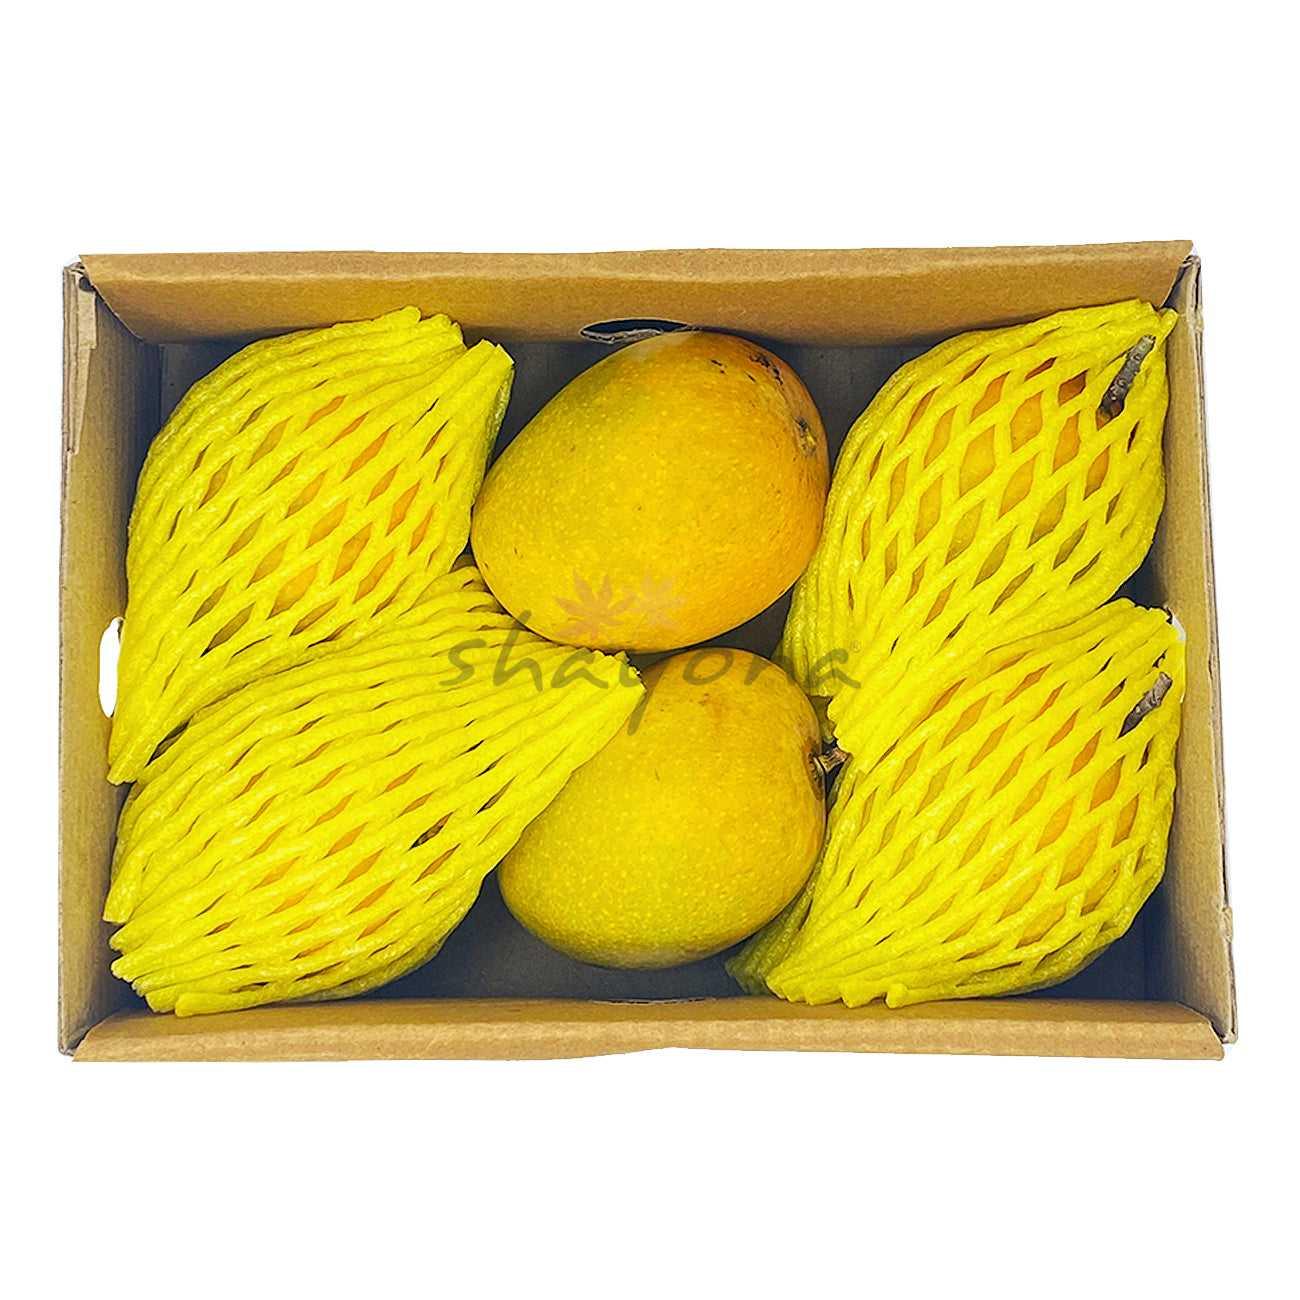 6 Alphonso Mangoes